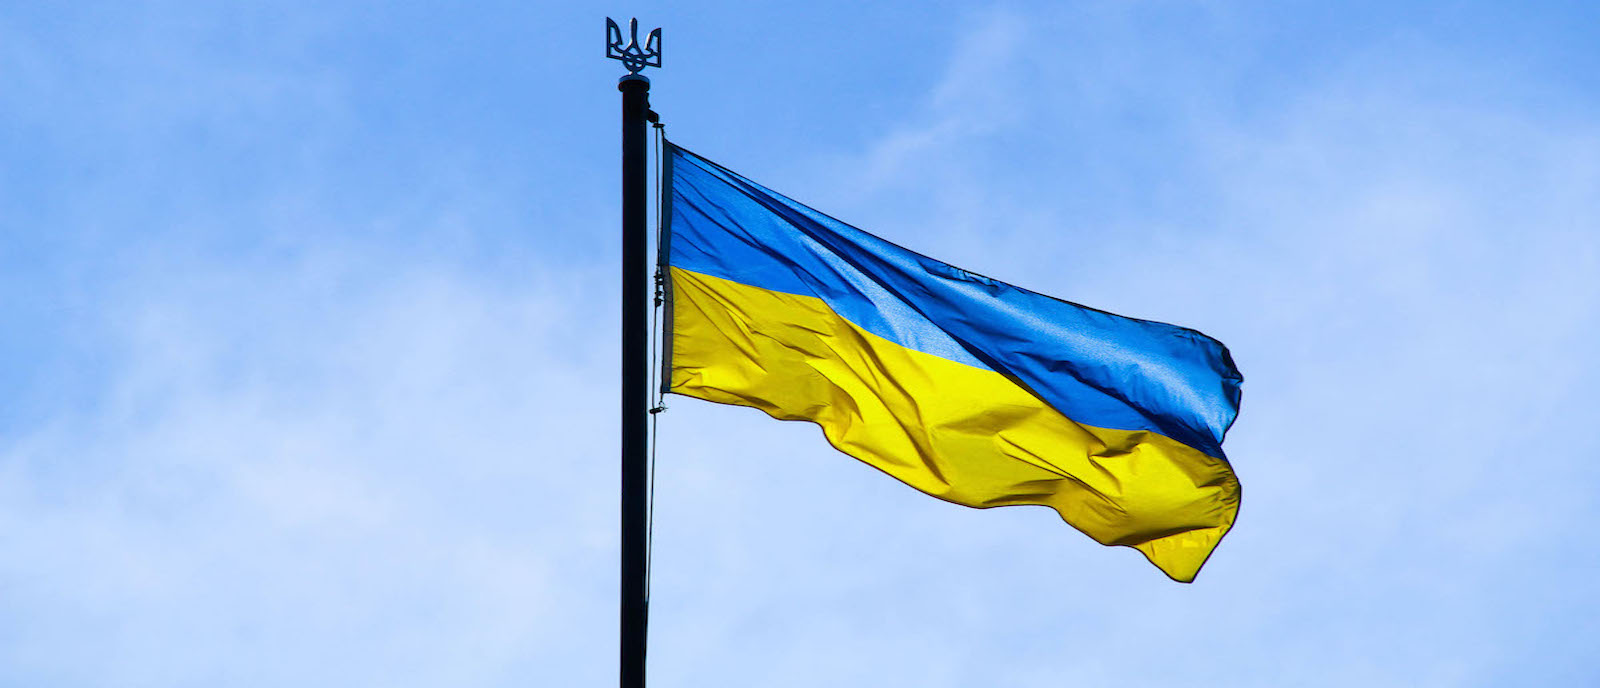 The Ukrainian flag waving